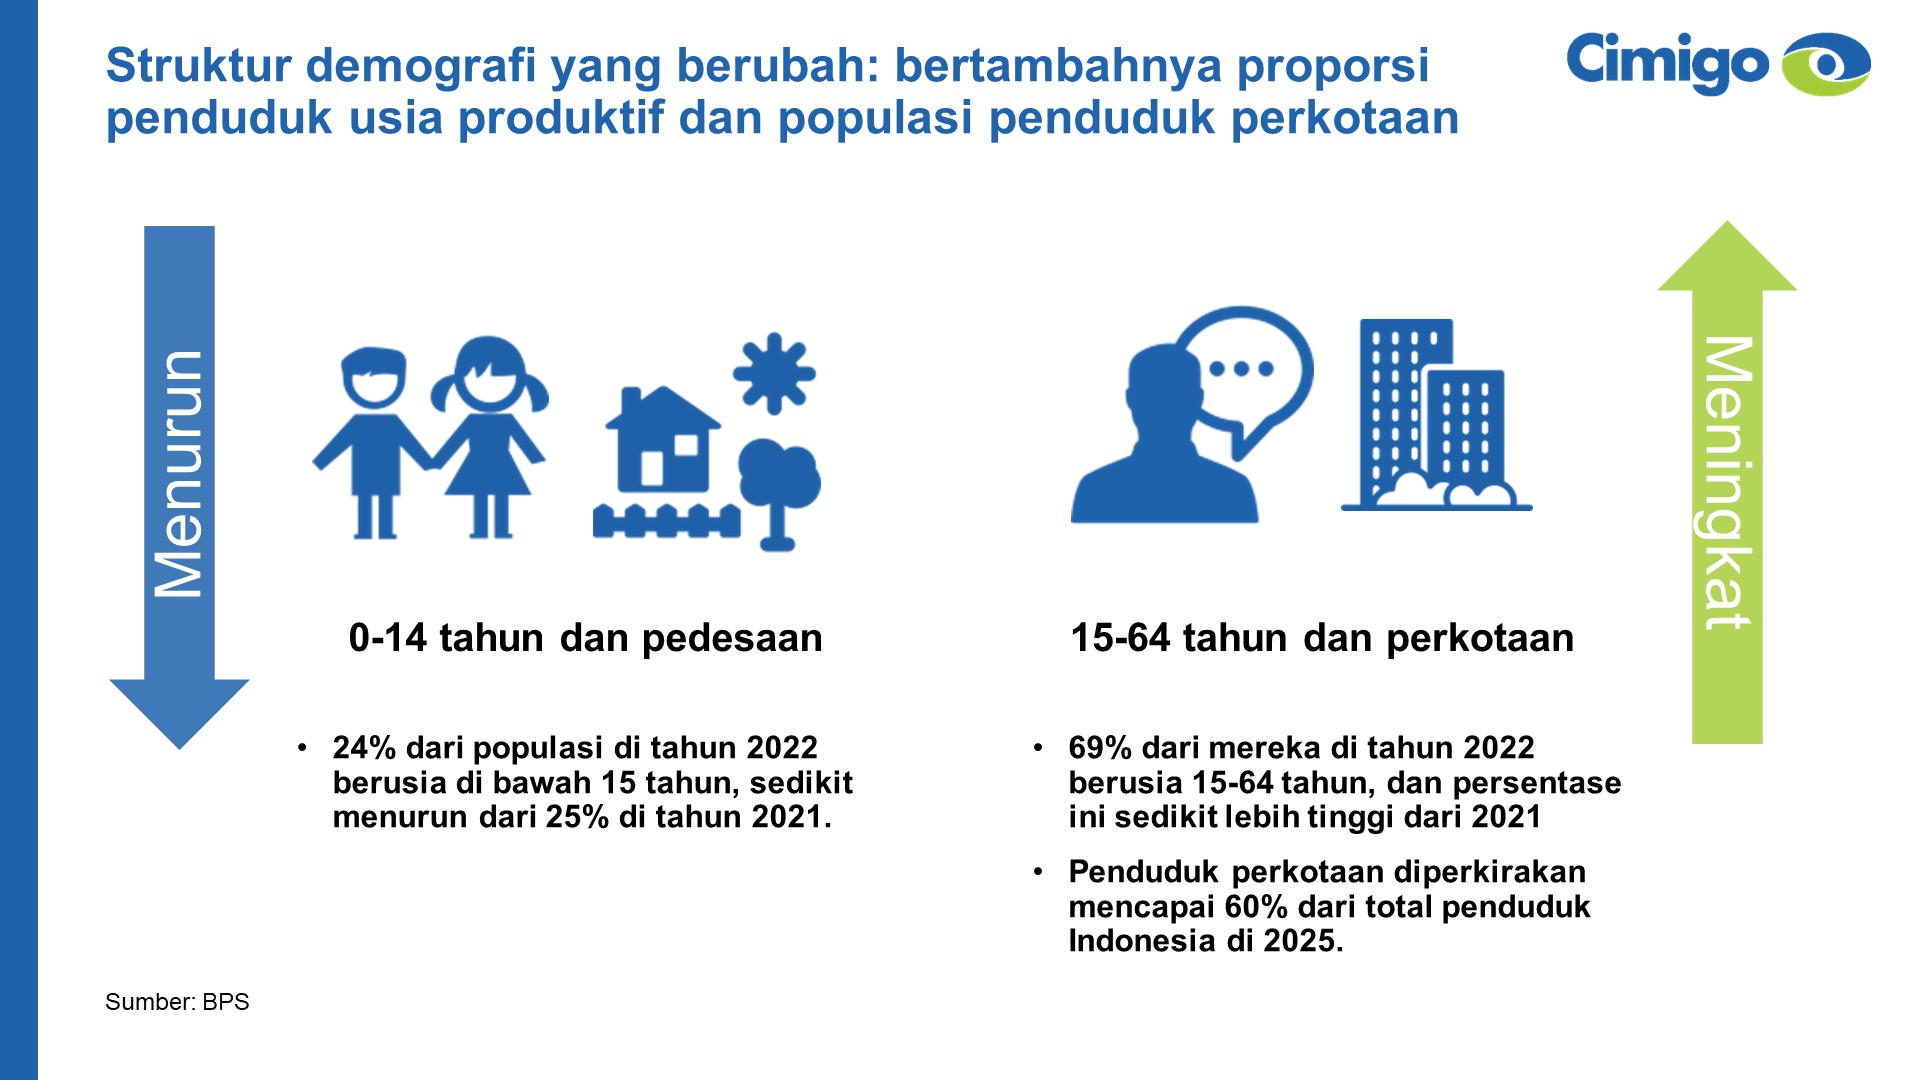 Penduduk usia produktif dan perkotaan di Indonesia